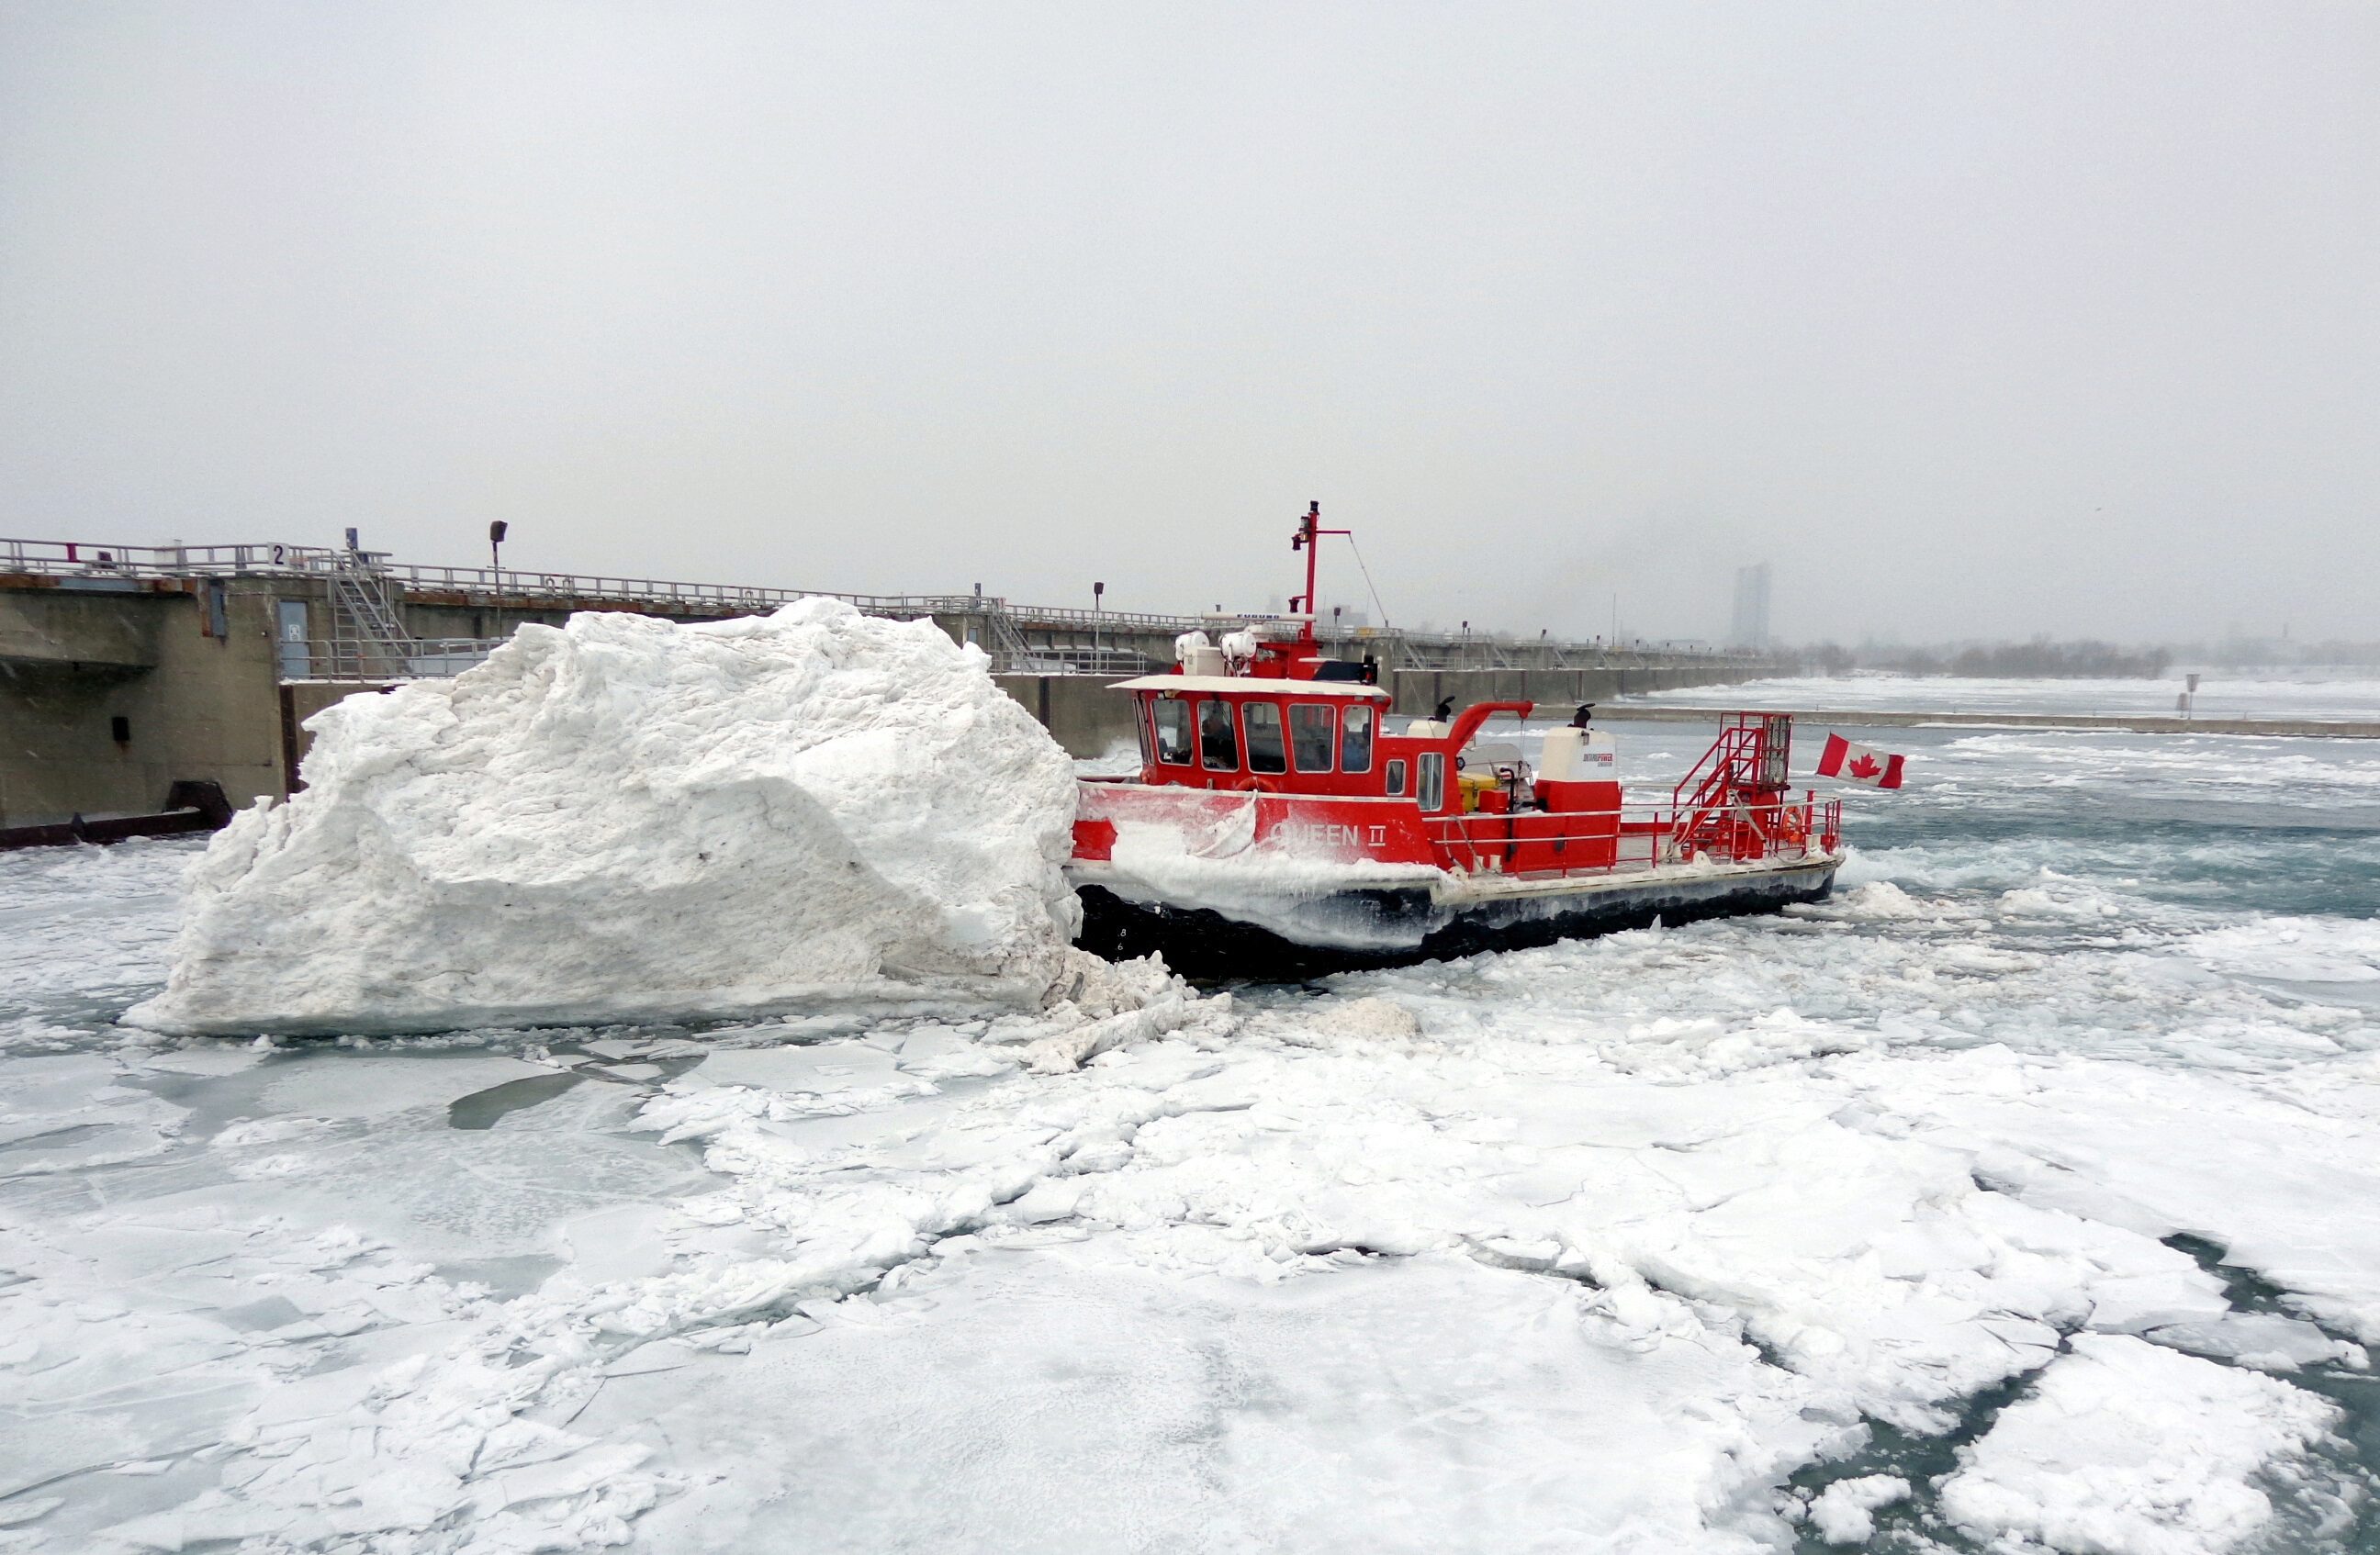 The Niagara Queen II icebreaker breaking up large chunks of ice.